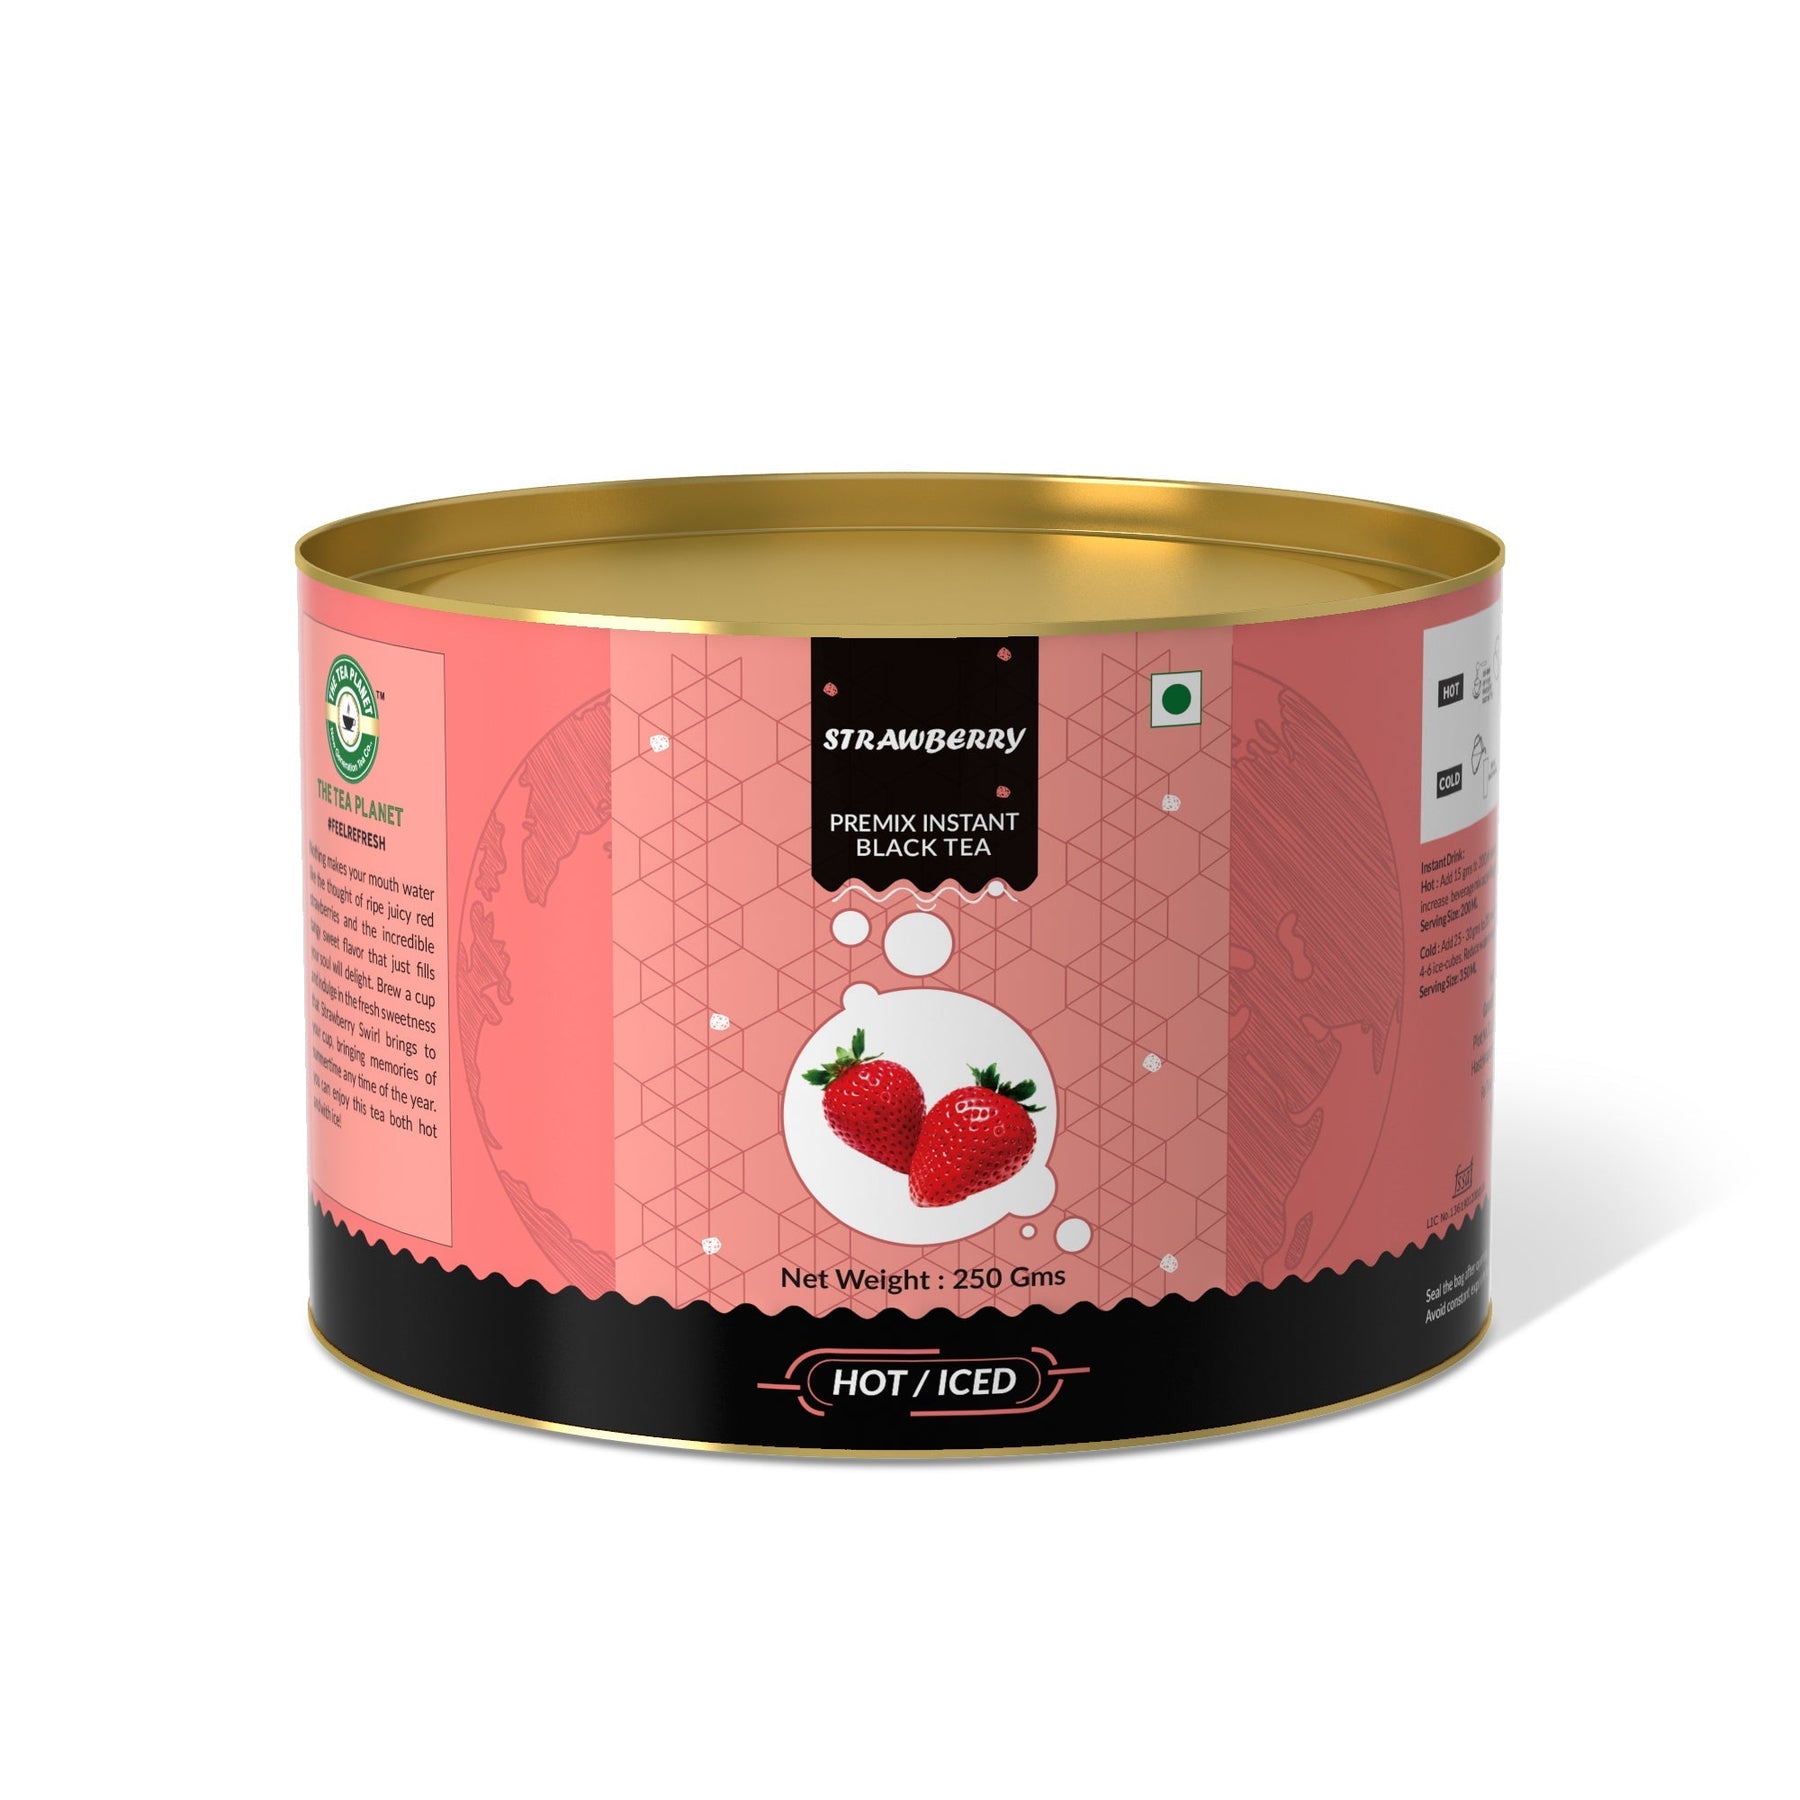 Strawberry Flavored Instant Black Tea - 400 gms